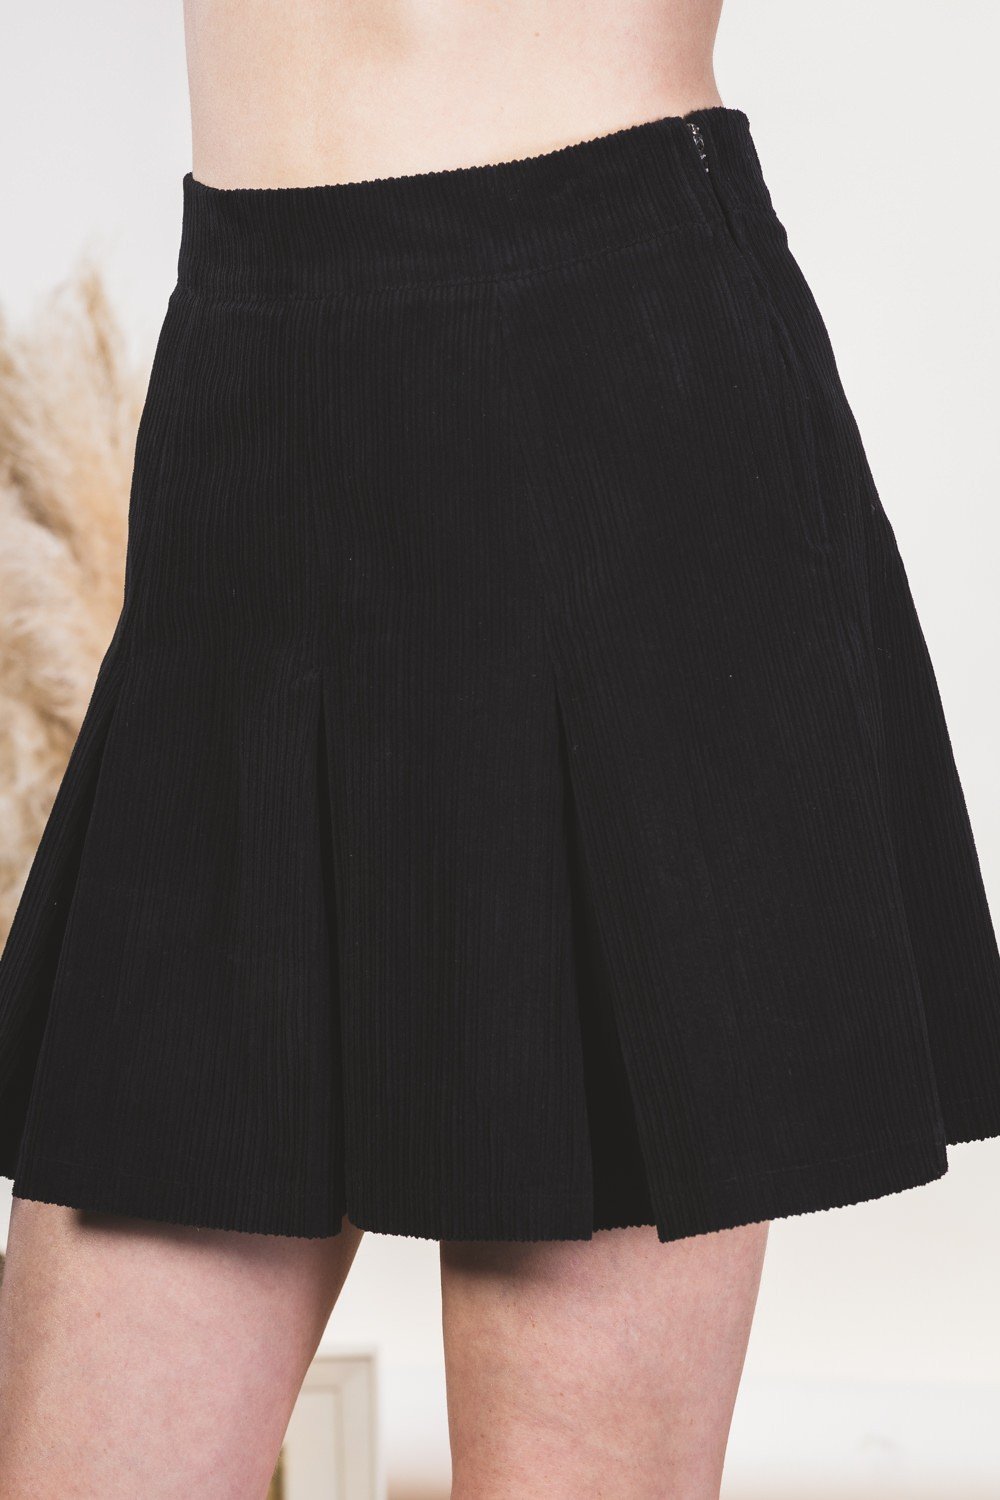 Next Generation Skirt - Black